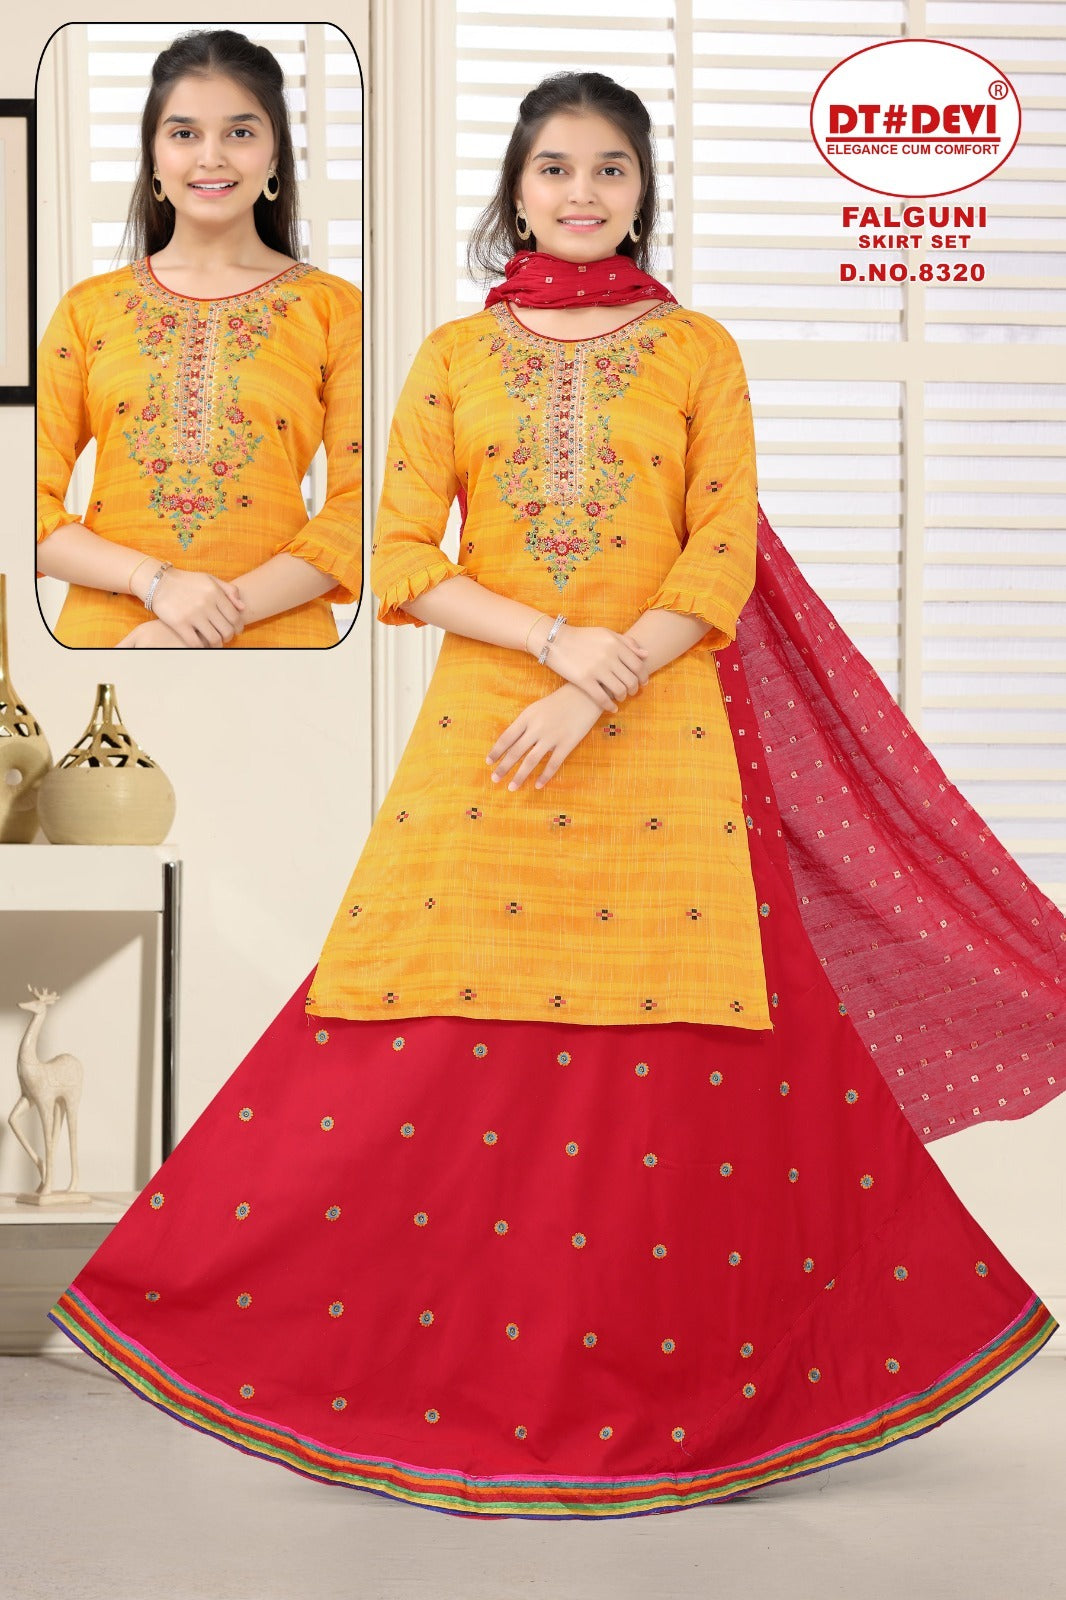 Falguni-8320 Dt Devi Silk Girls Readymade Skirt Style Suits